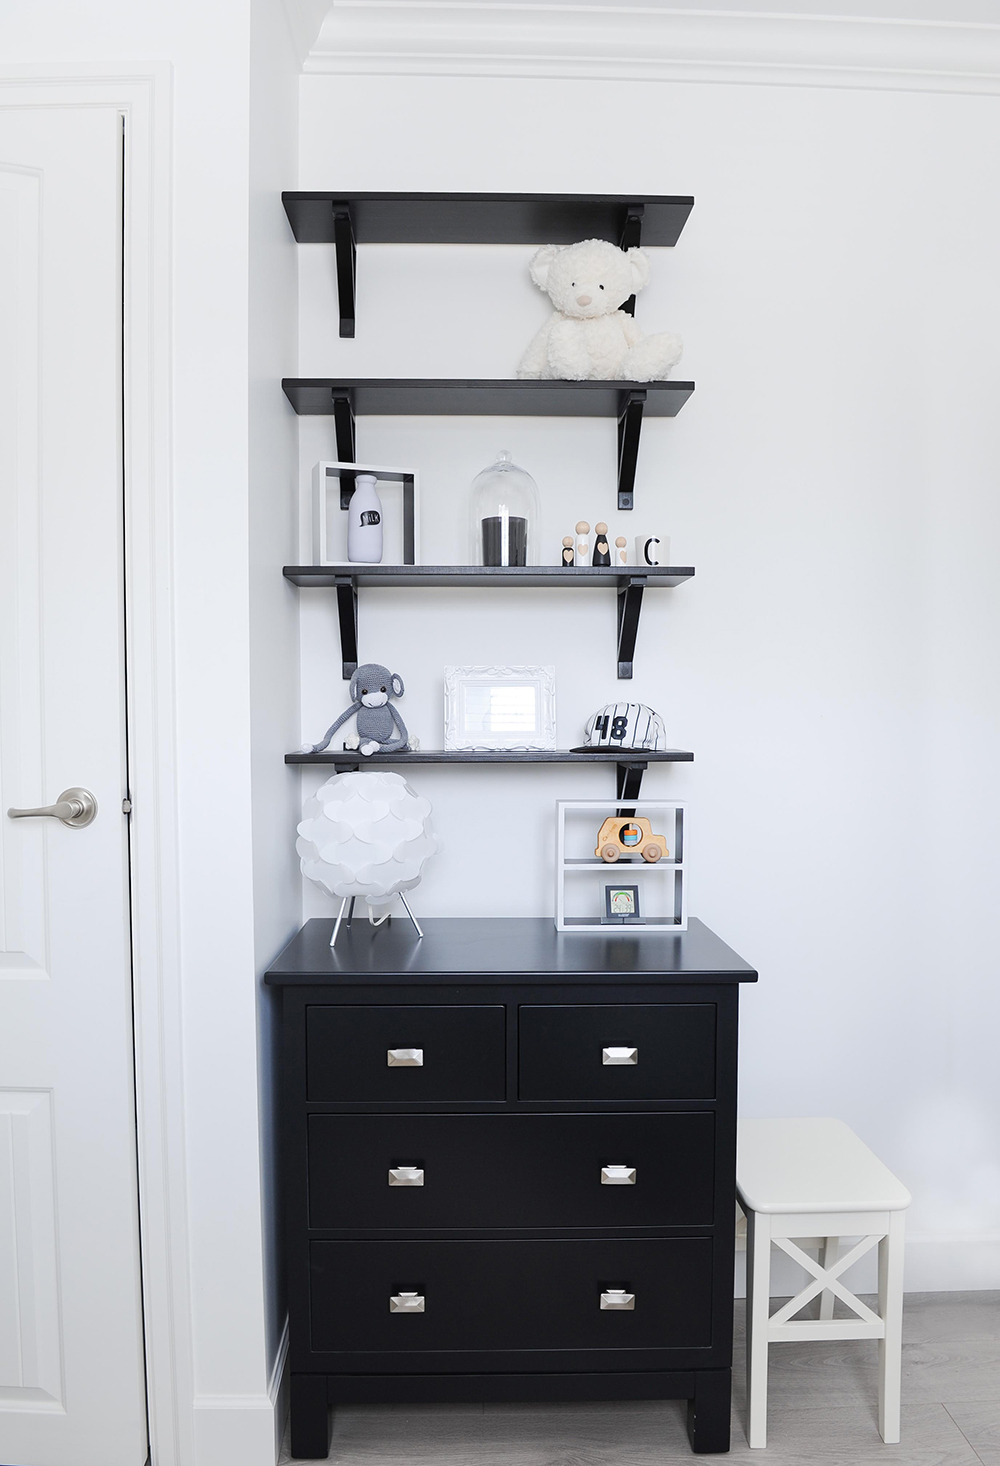 Sleek black wall-mounted shelves sit above a custom maple dresser.